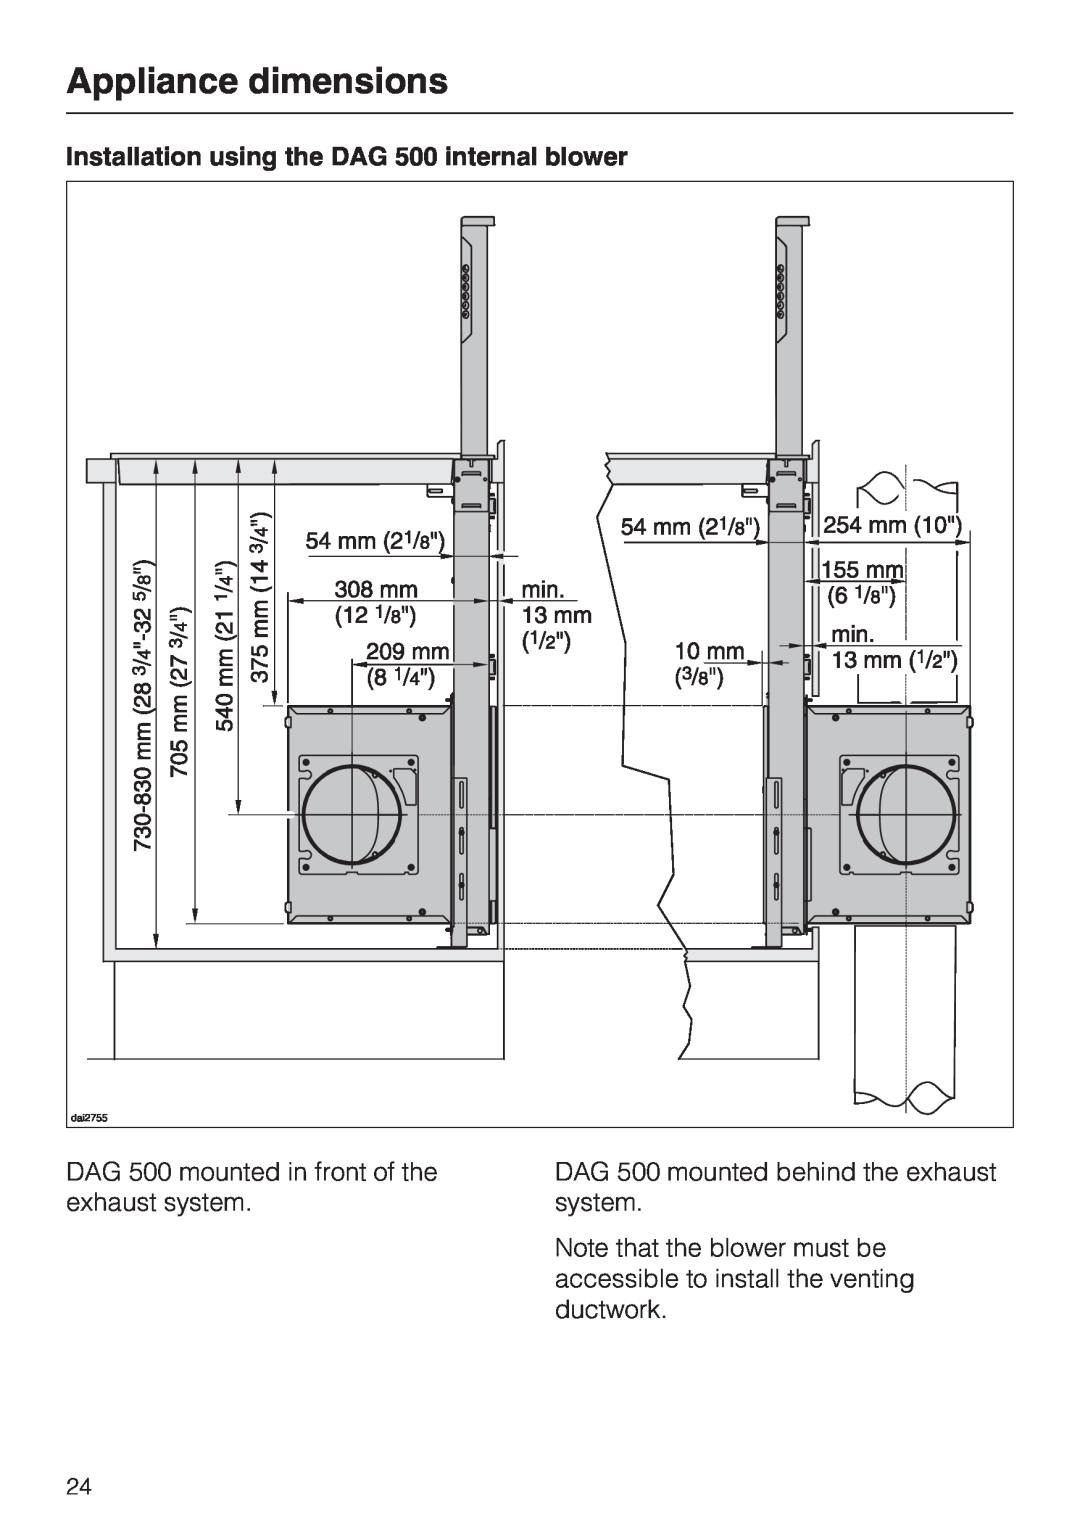 Miele DA 6490, DA 6480, DAG 1000 Installation using the DAG 500 internal blower, Appliance dimensions 